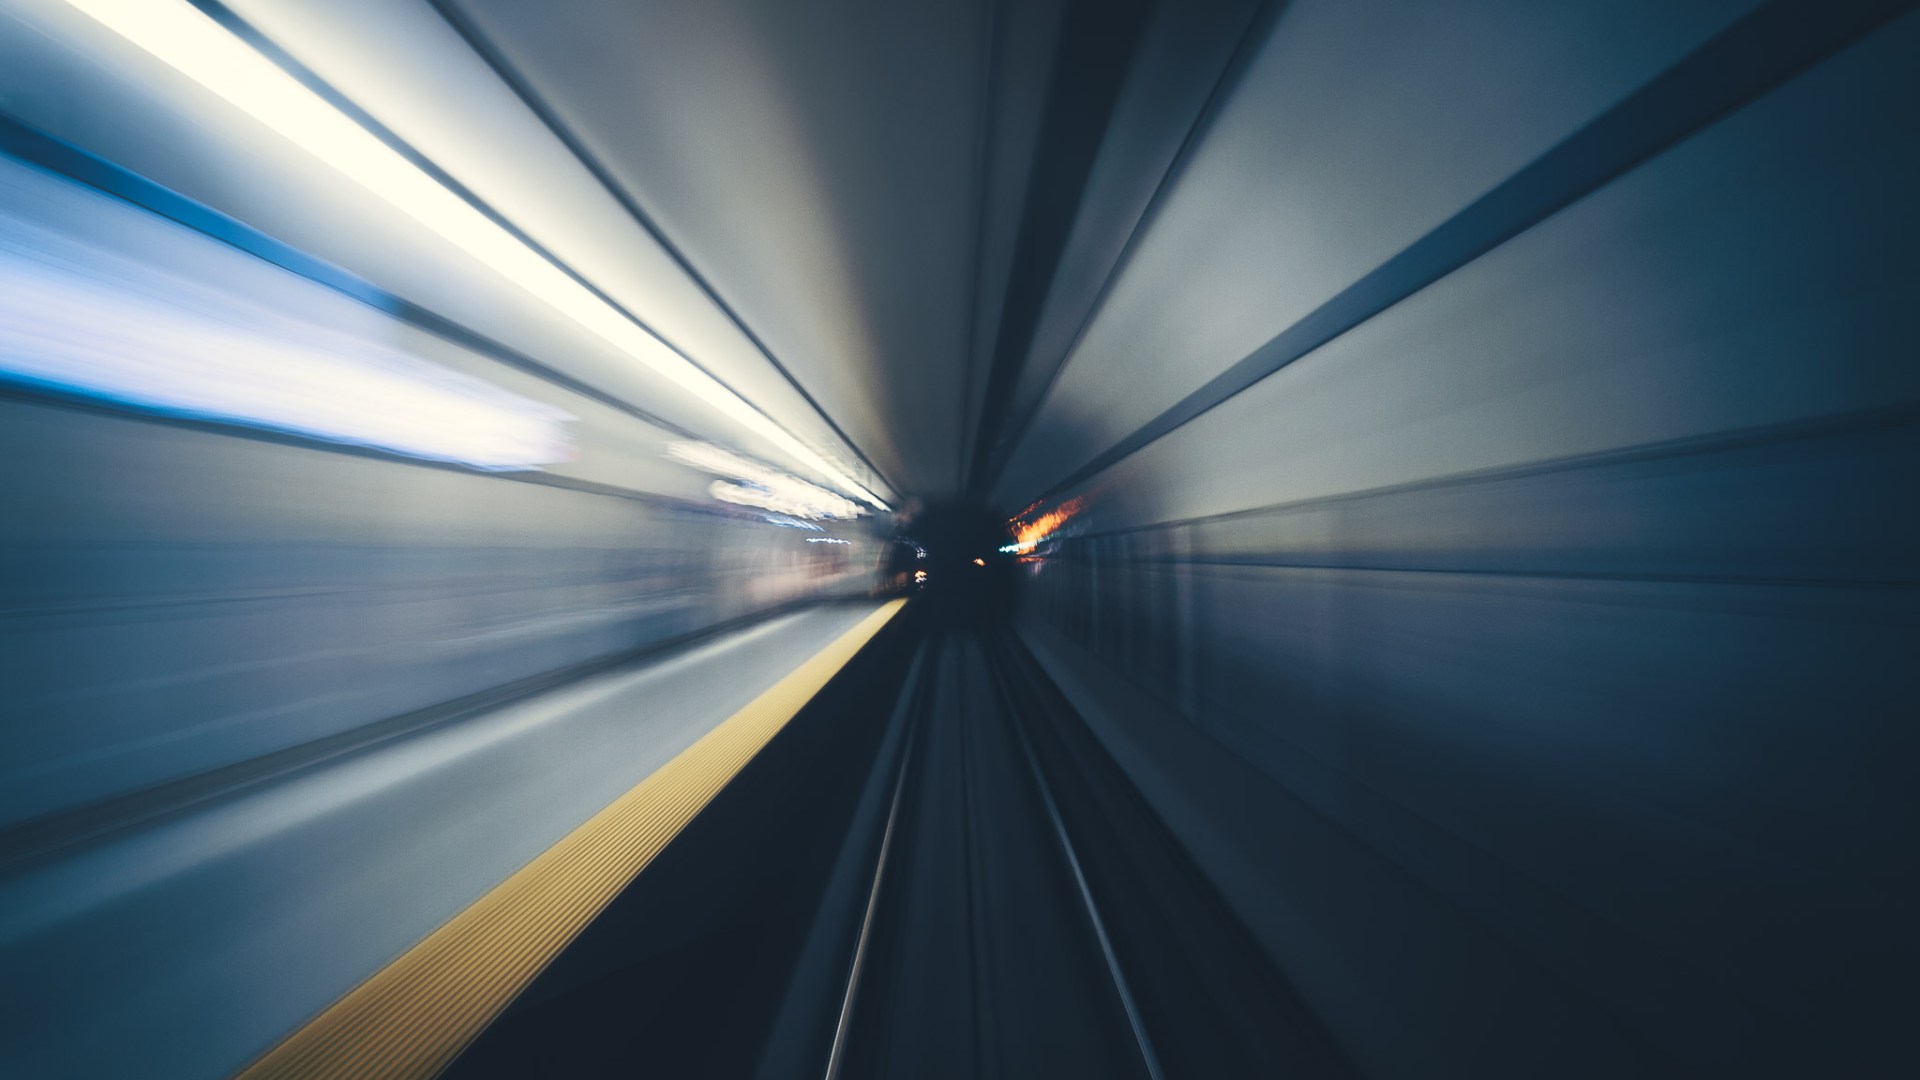 Toronto Subway Tunnel at the Speed of Light | John Cavacas Photography